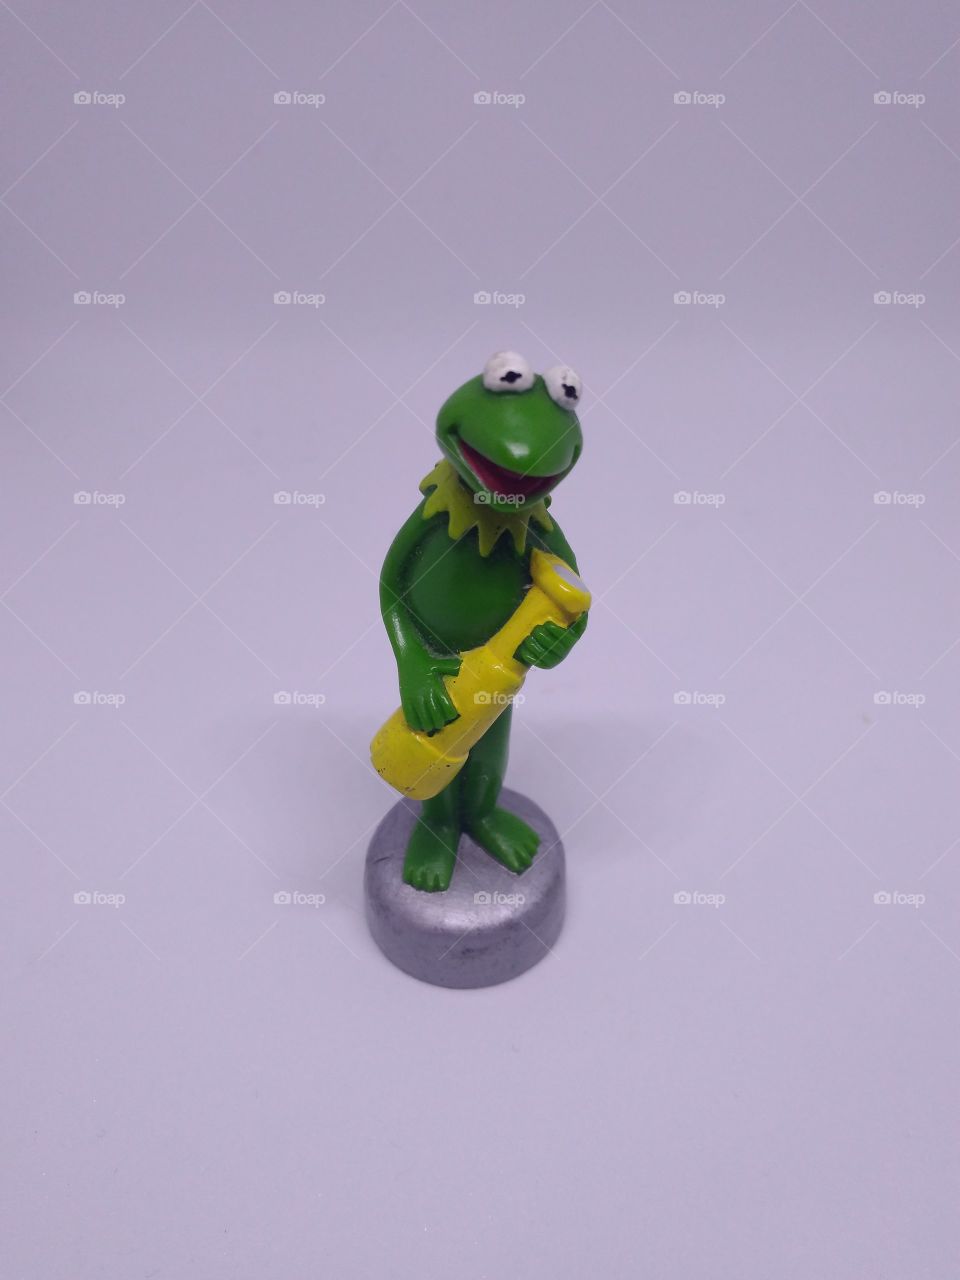 Kermit and Henson frog figurine